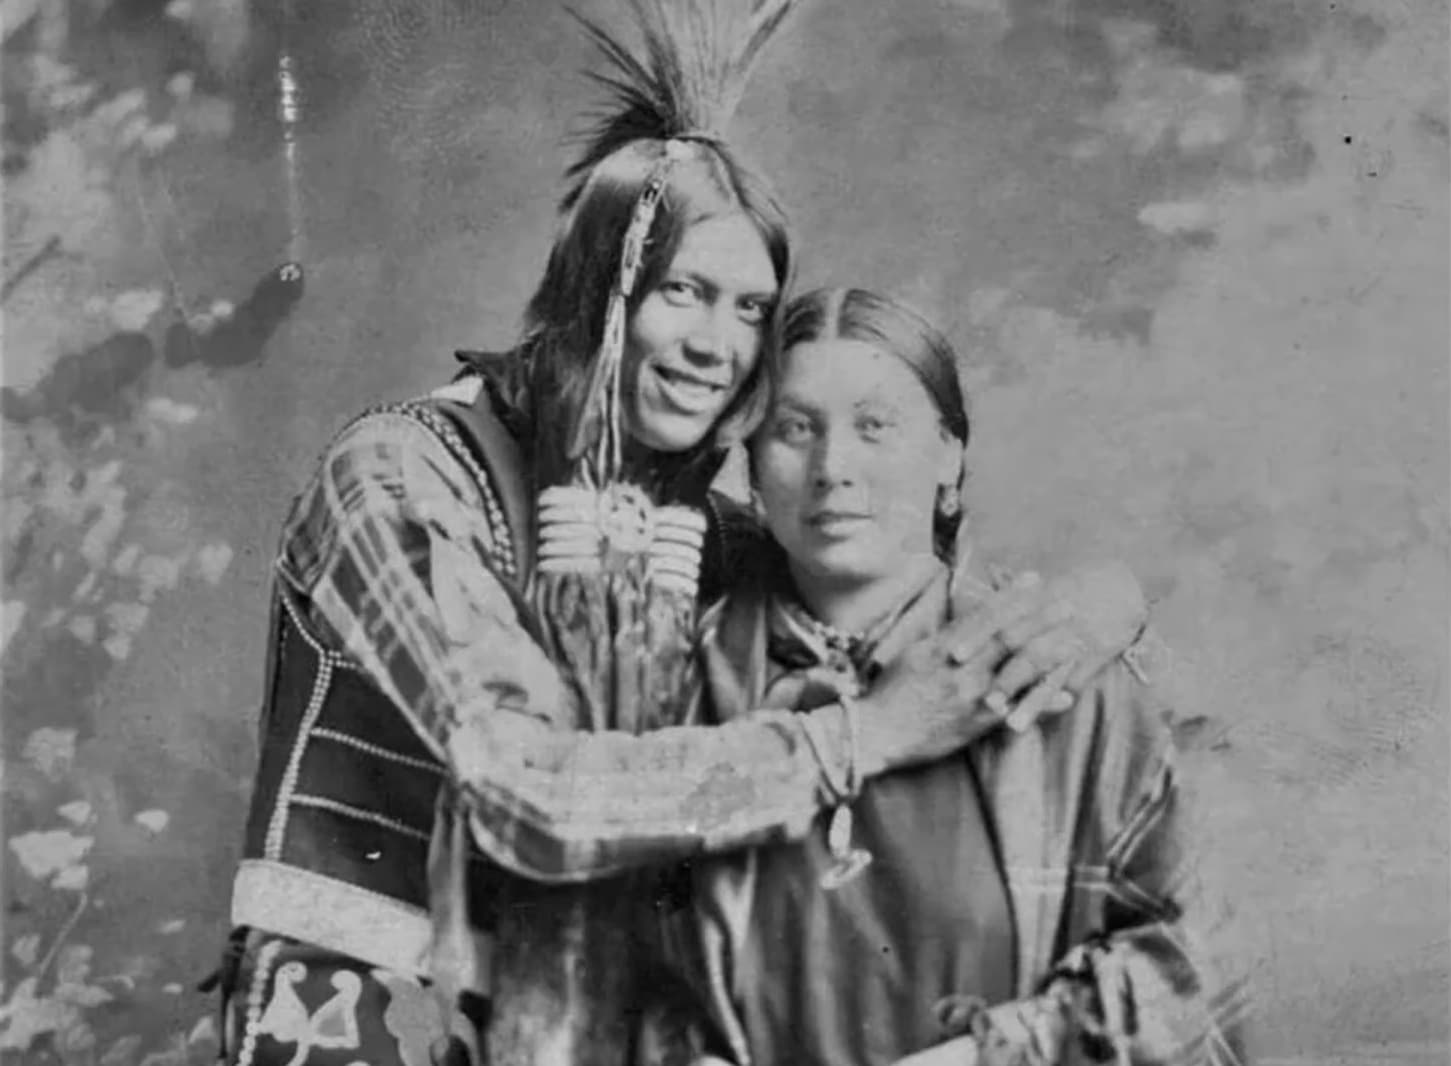 A Native American man embraces a woman, unknown date